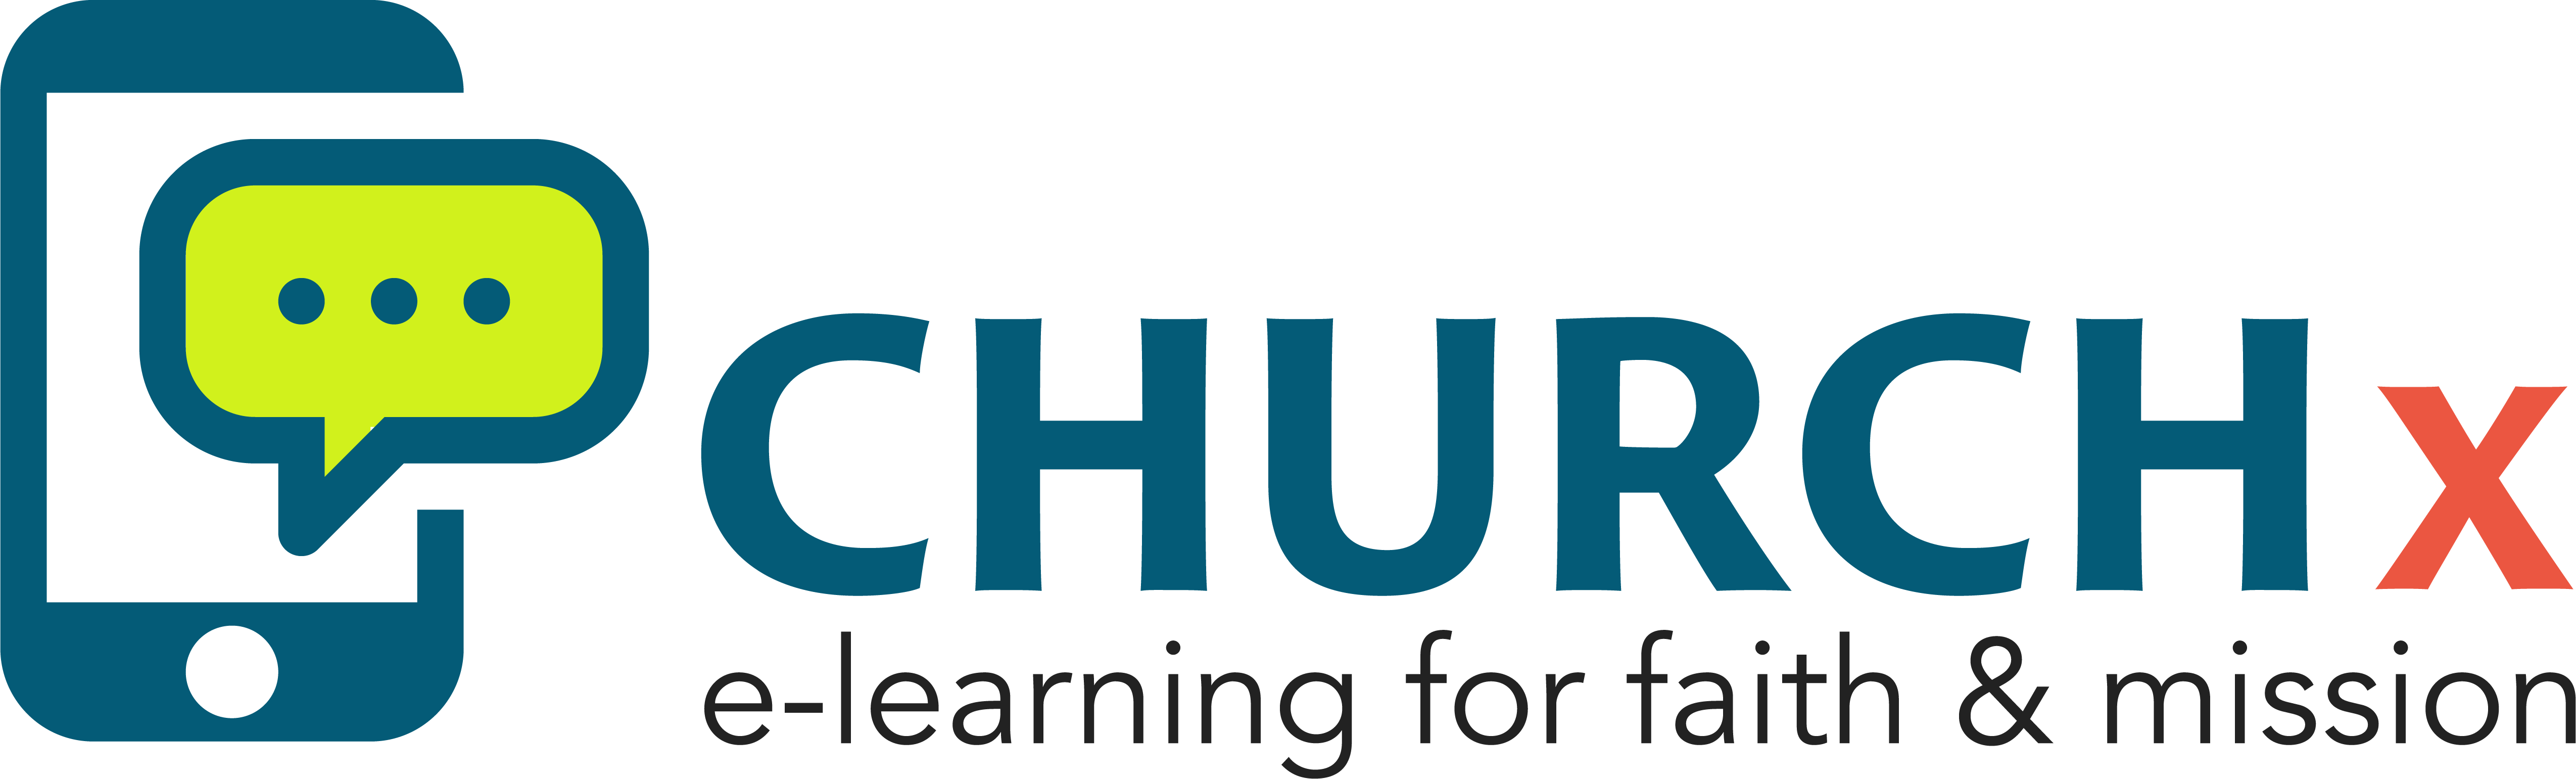 Image of ChurchX logo